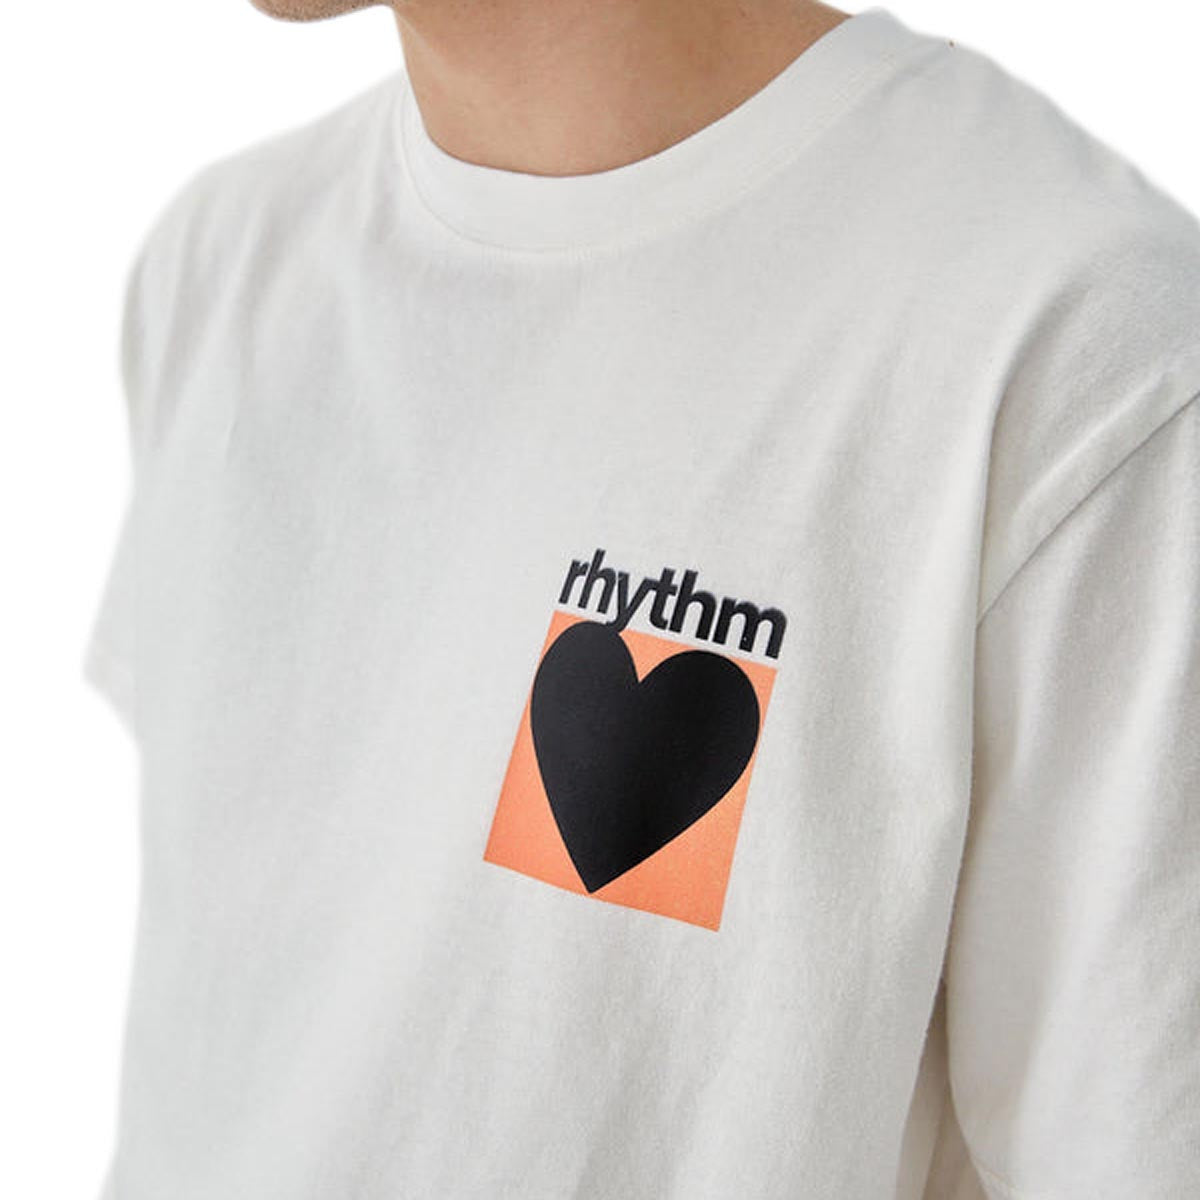 Rhythm Factory Vintage T-Shirt - Vintage White image 3